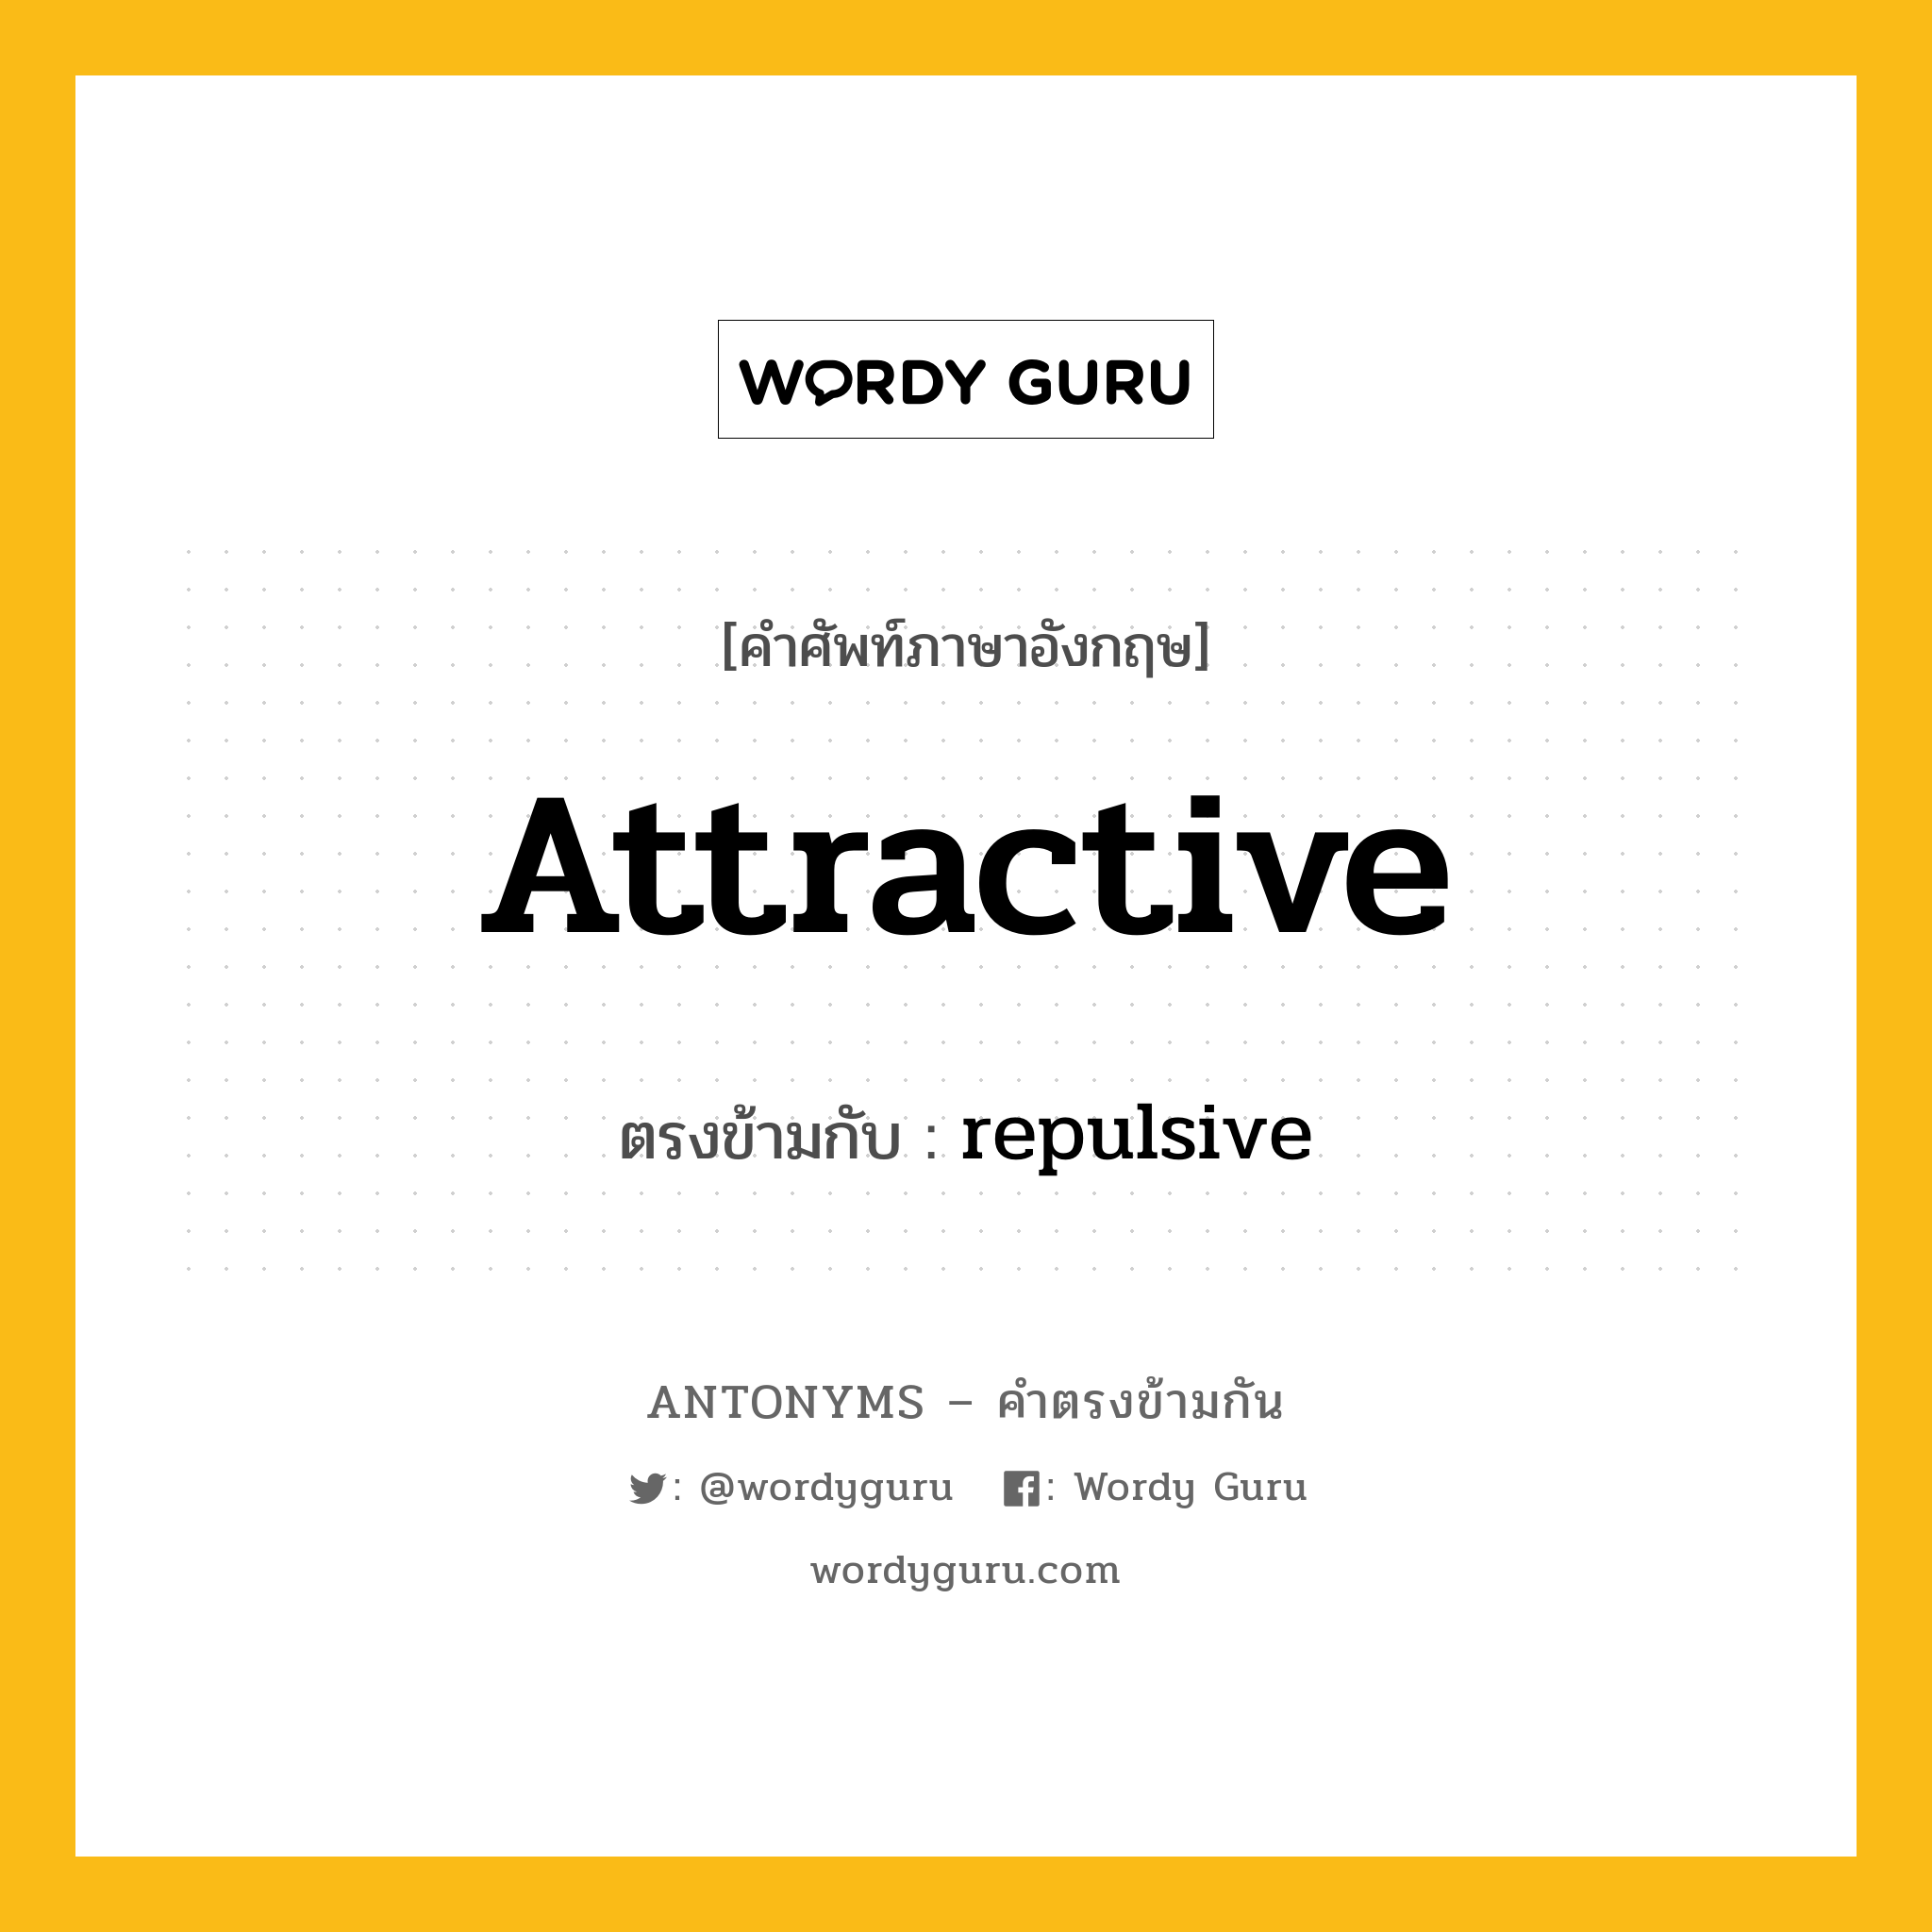 attractive เป็นคำตรงข้ามกับคำไหนบ้าง?, คำศัพท์ภาษาอังกฤษ attractive ตรงข้ามกับ repulsive หมวด repulsive